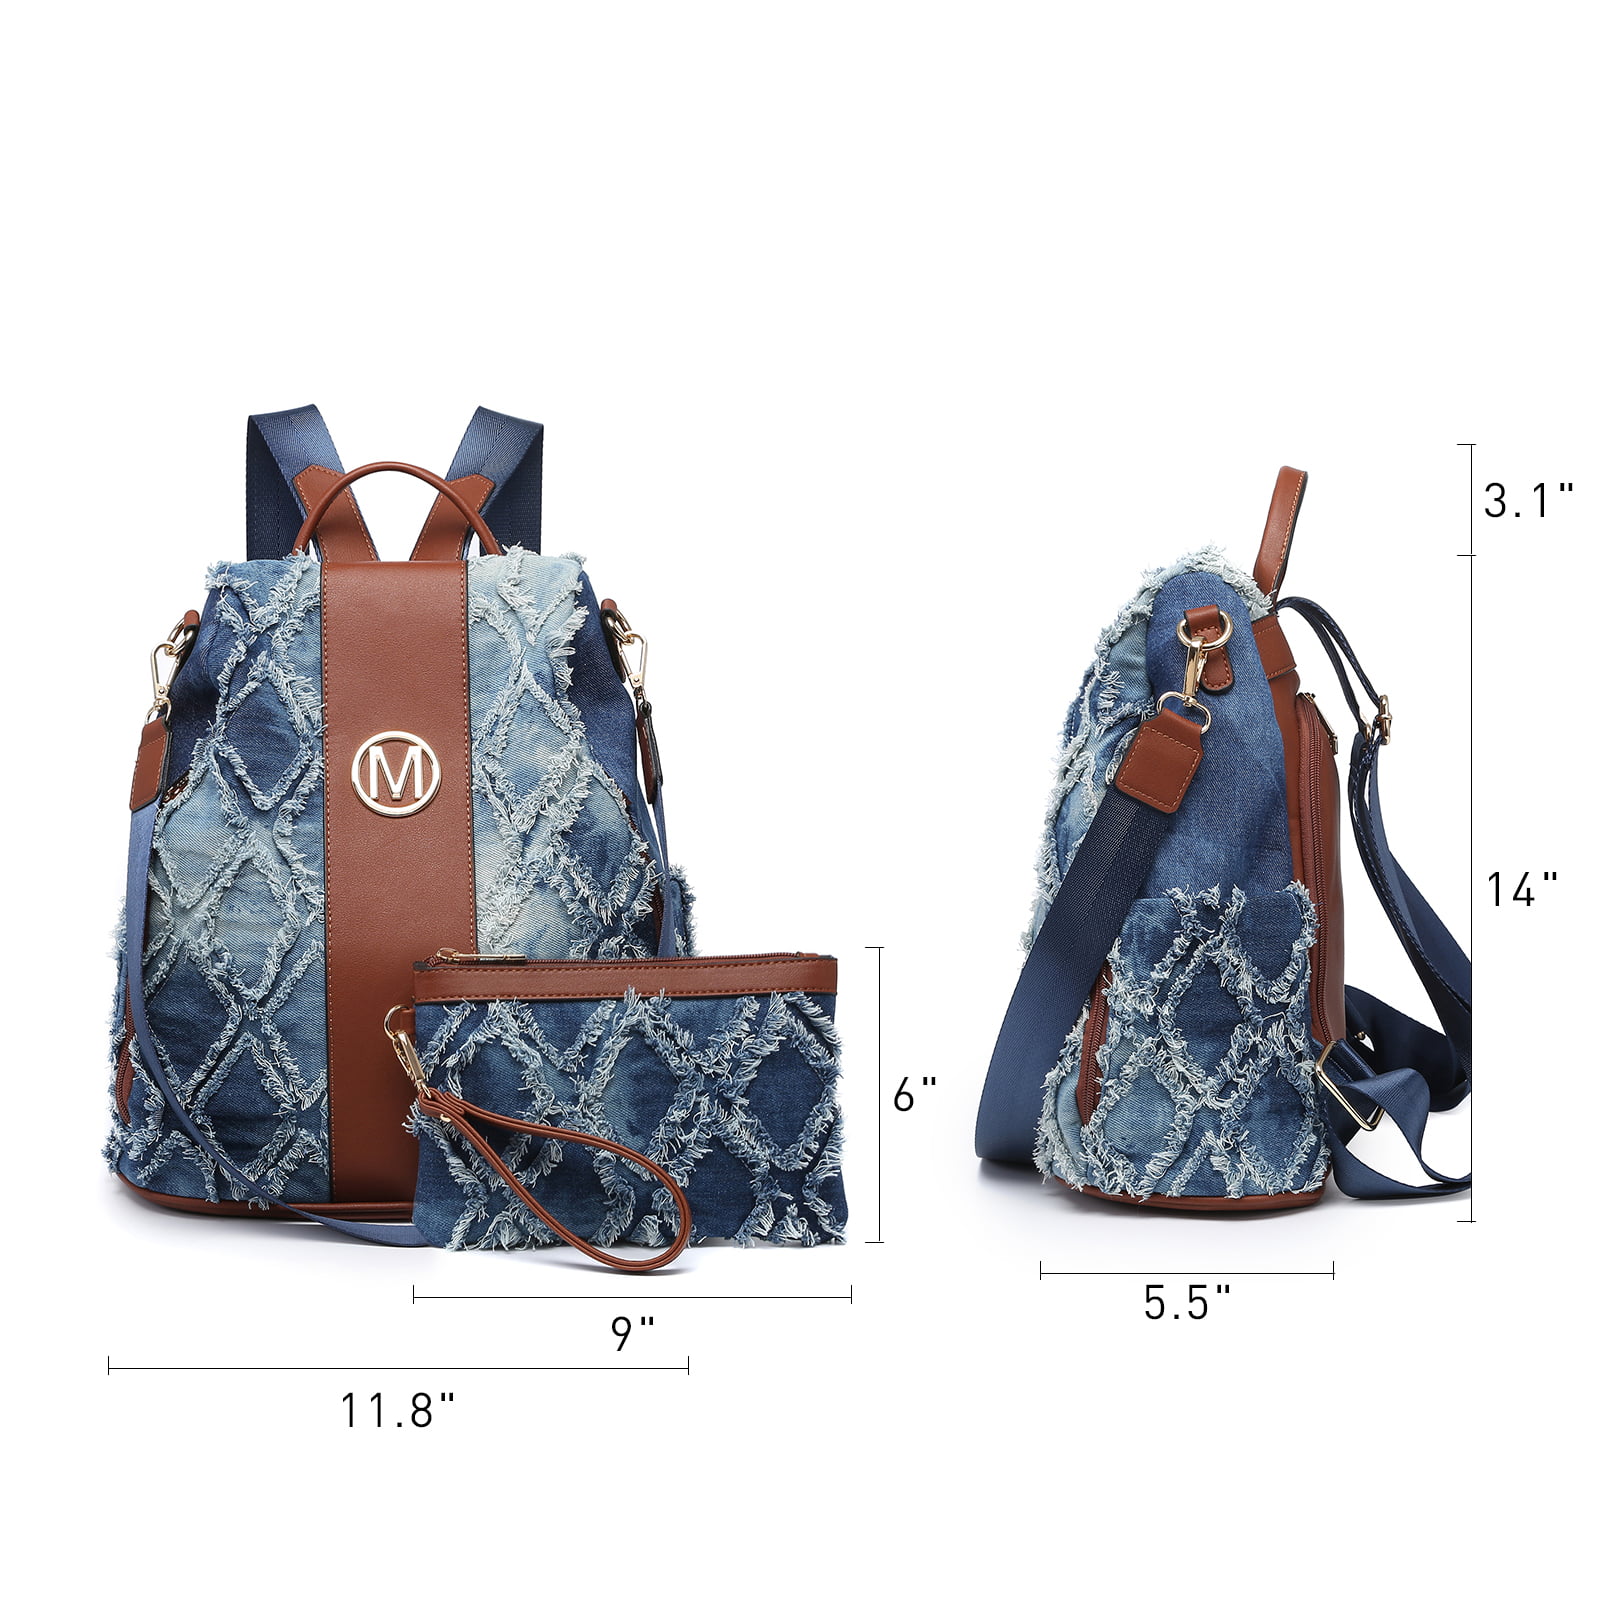  M Marco Women's Fashion Satchel Handbags with Matching